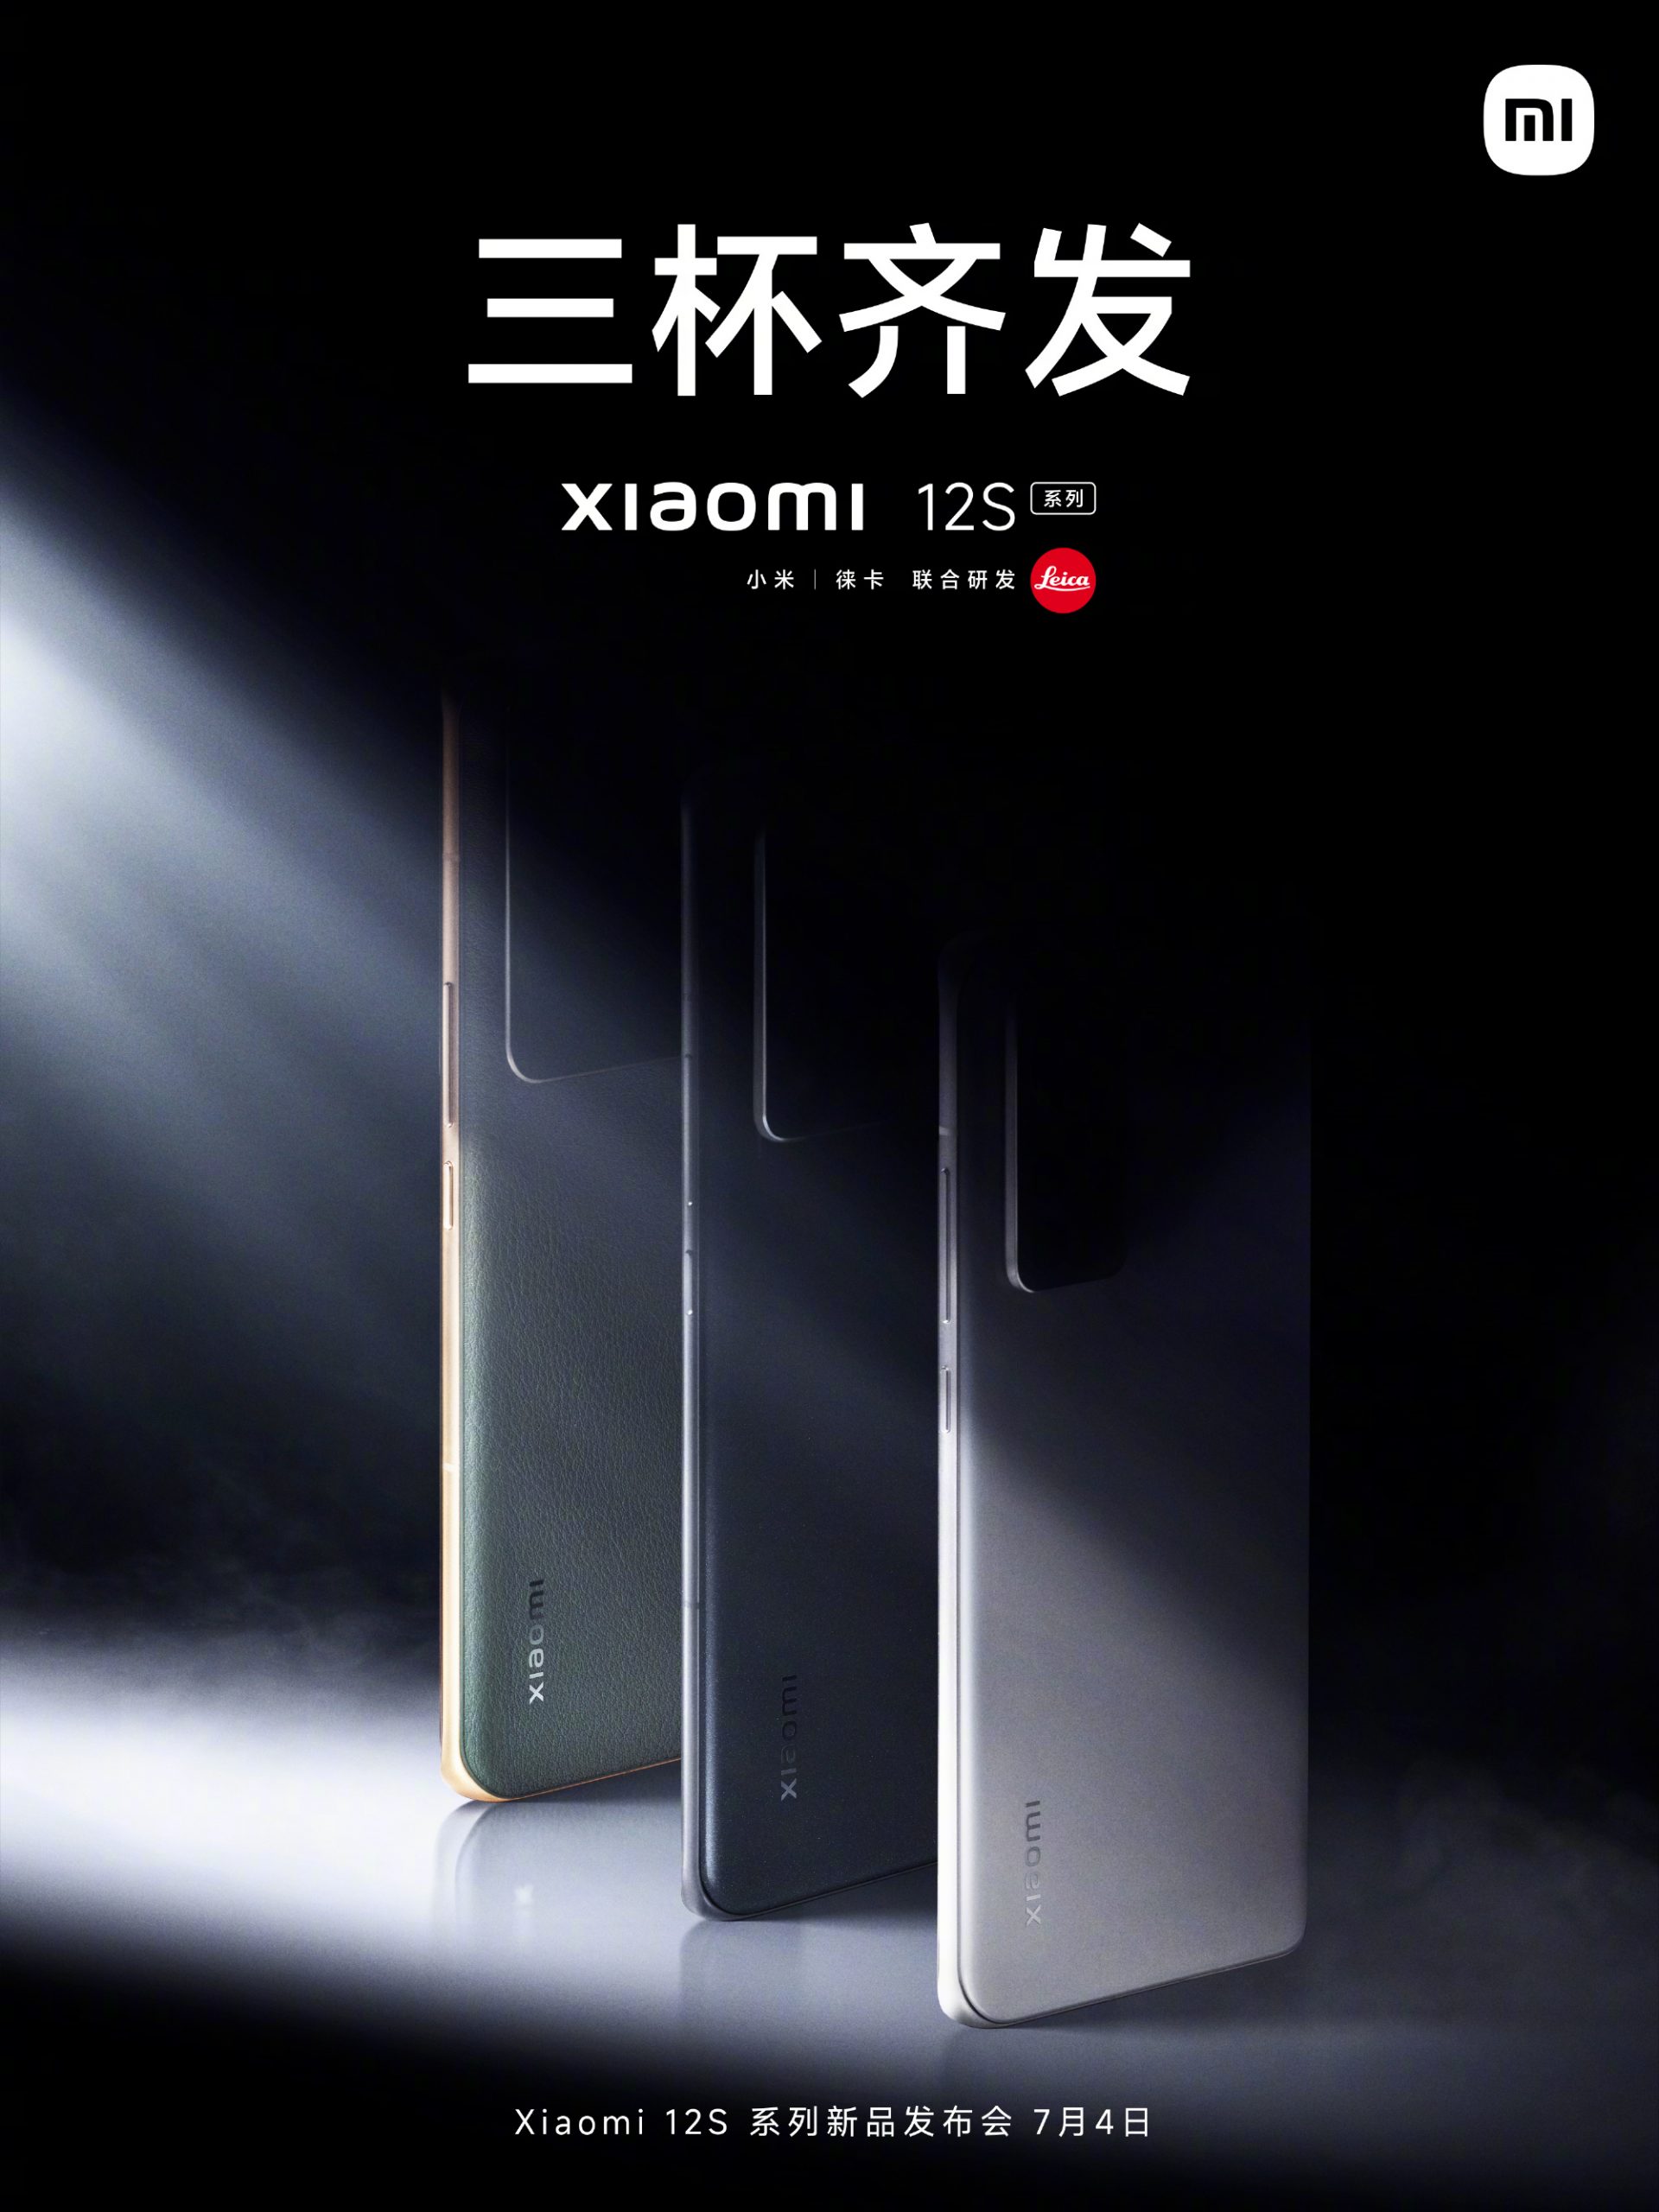 xiaomi 12s phones scaled